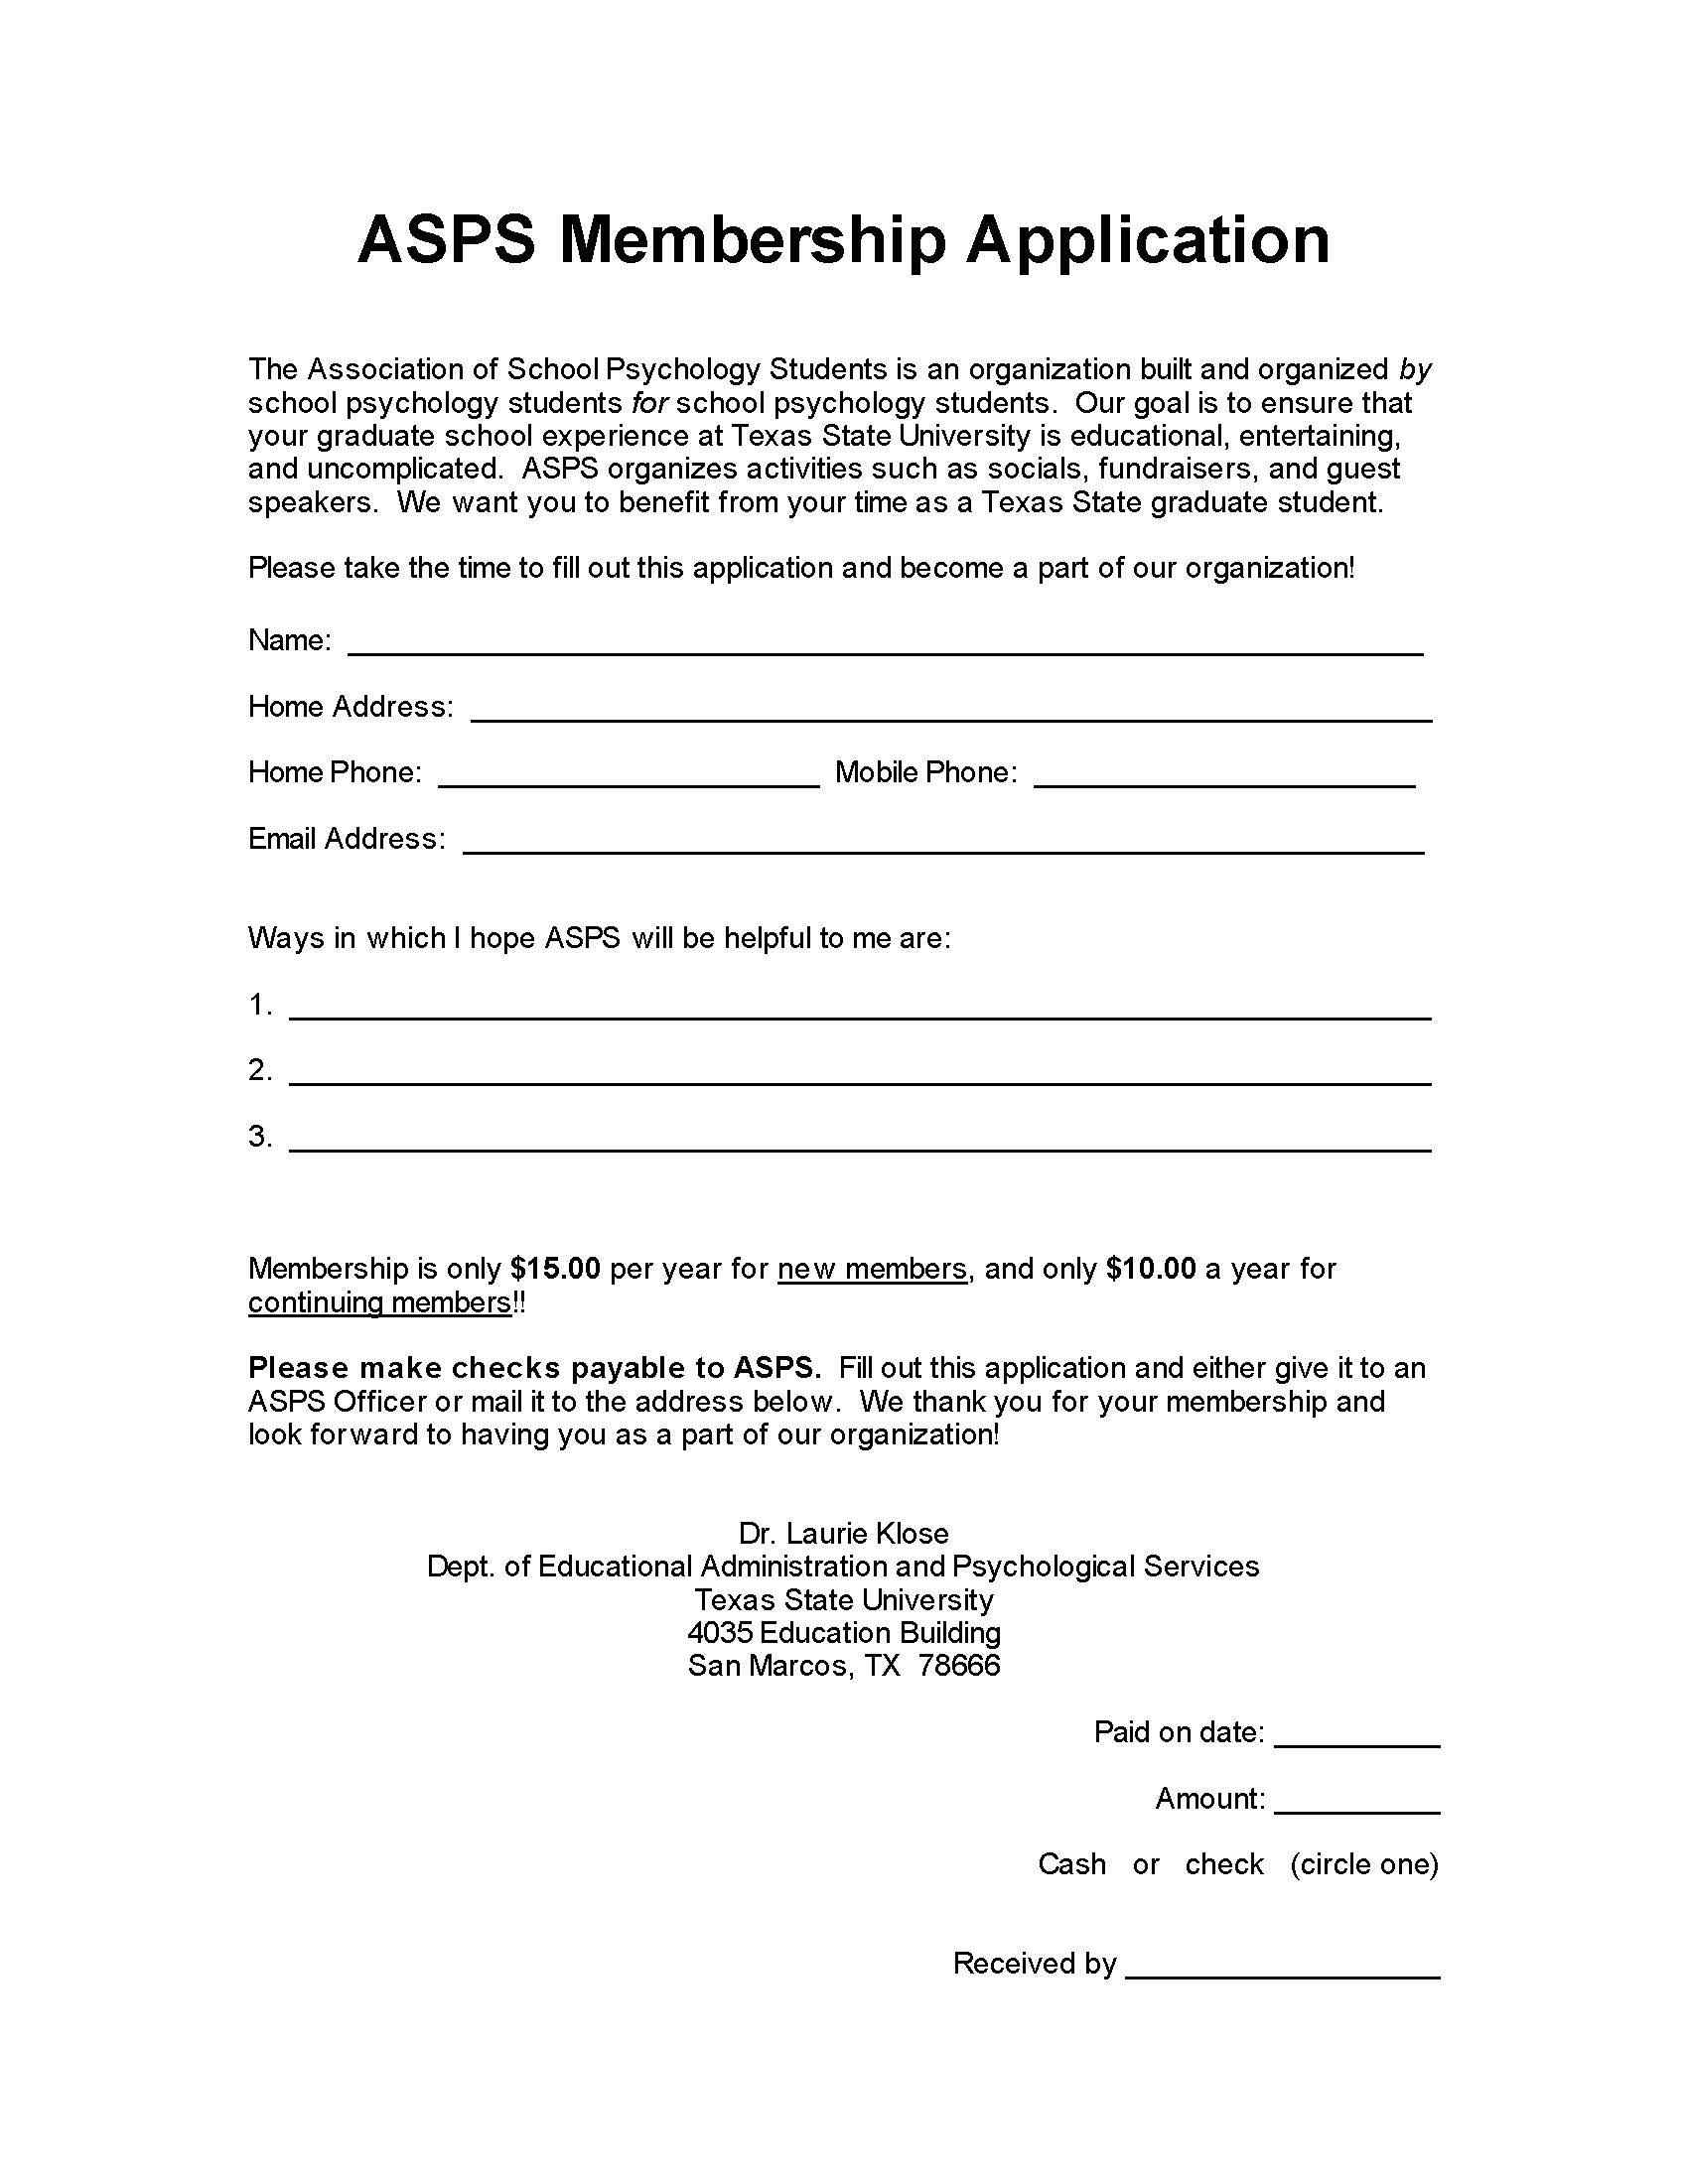 ASPS membership application